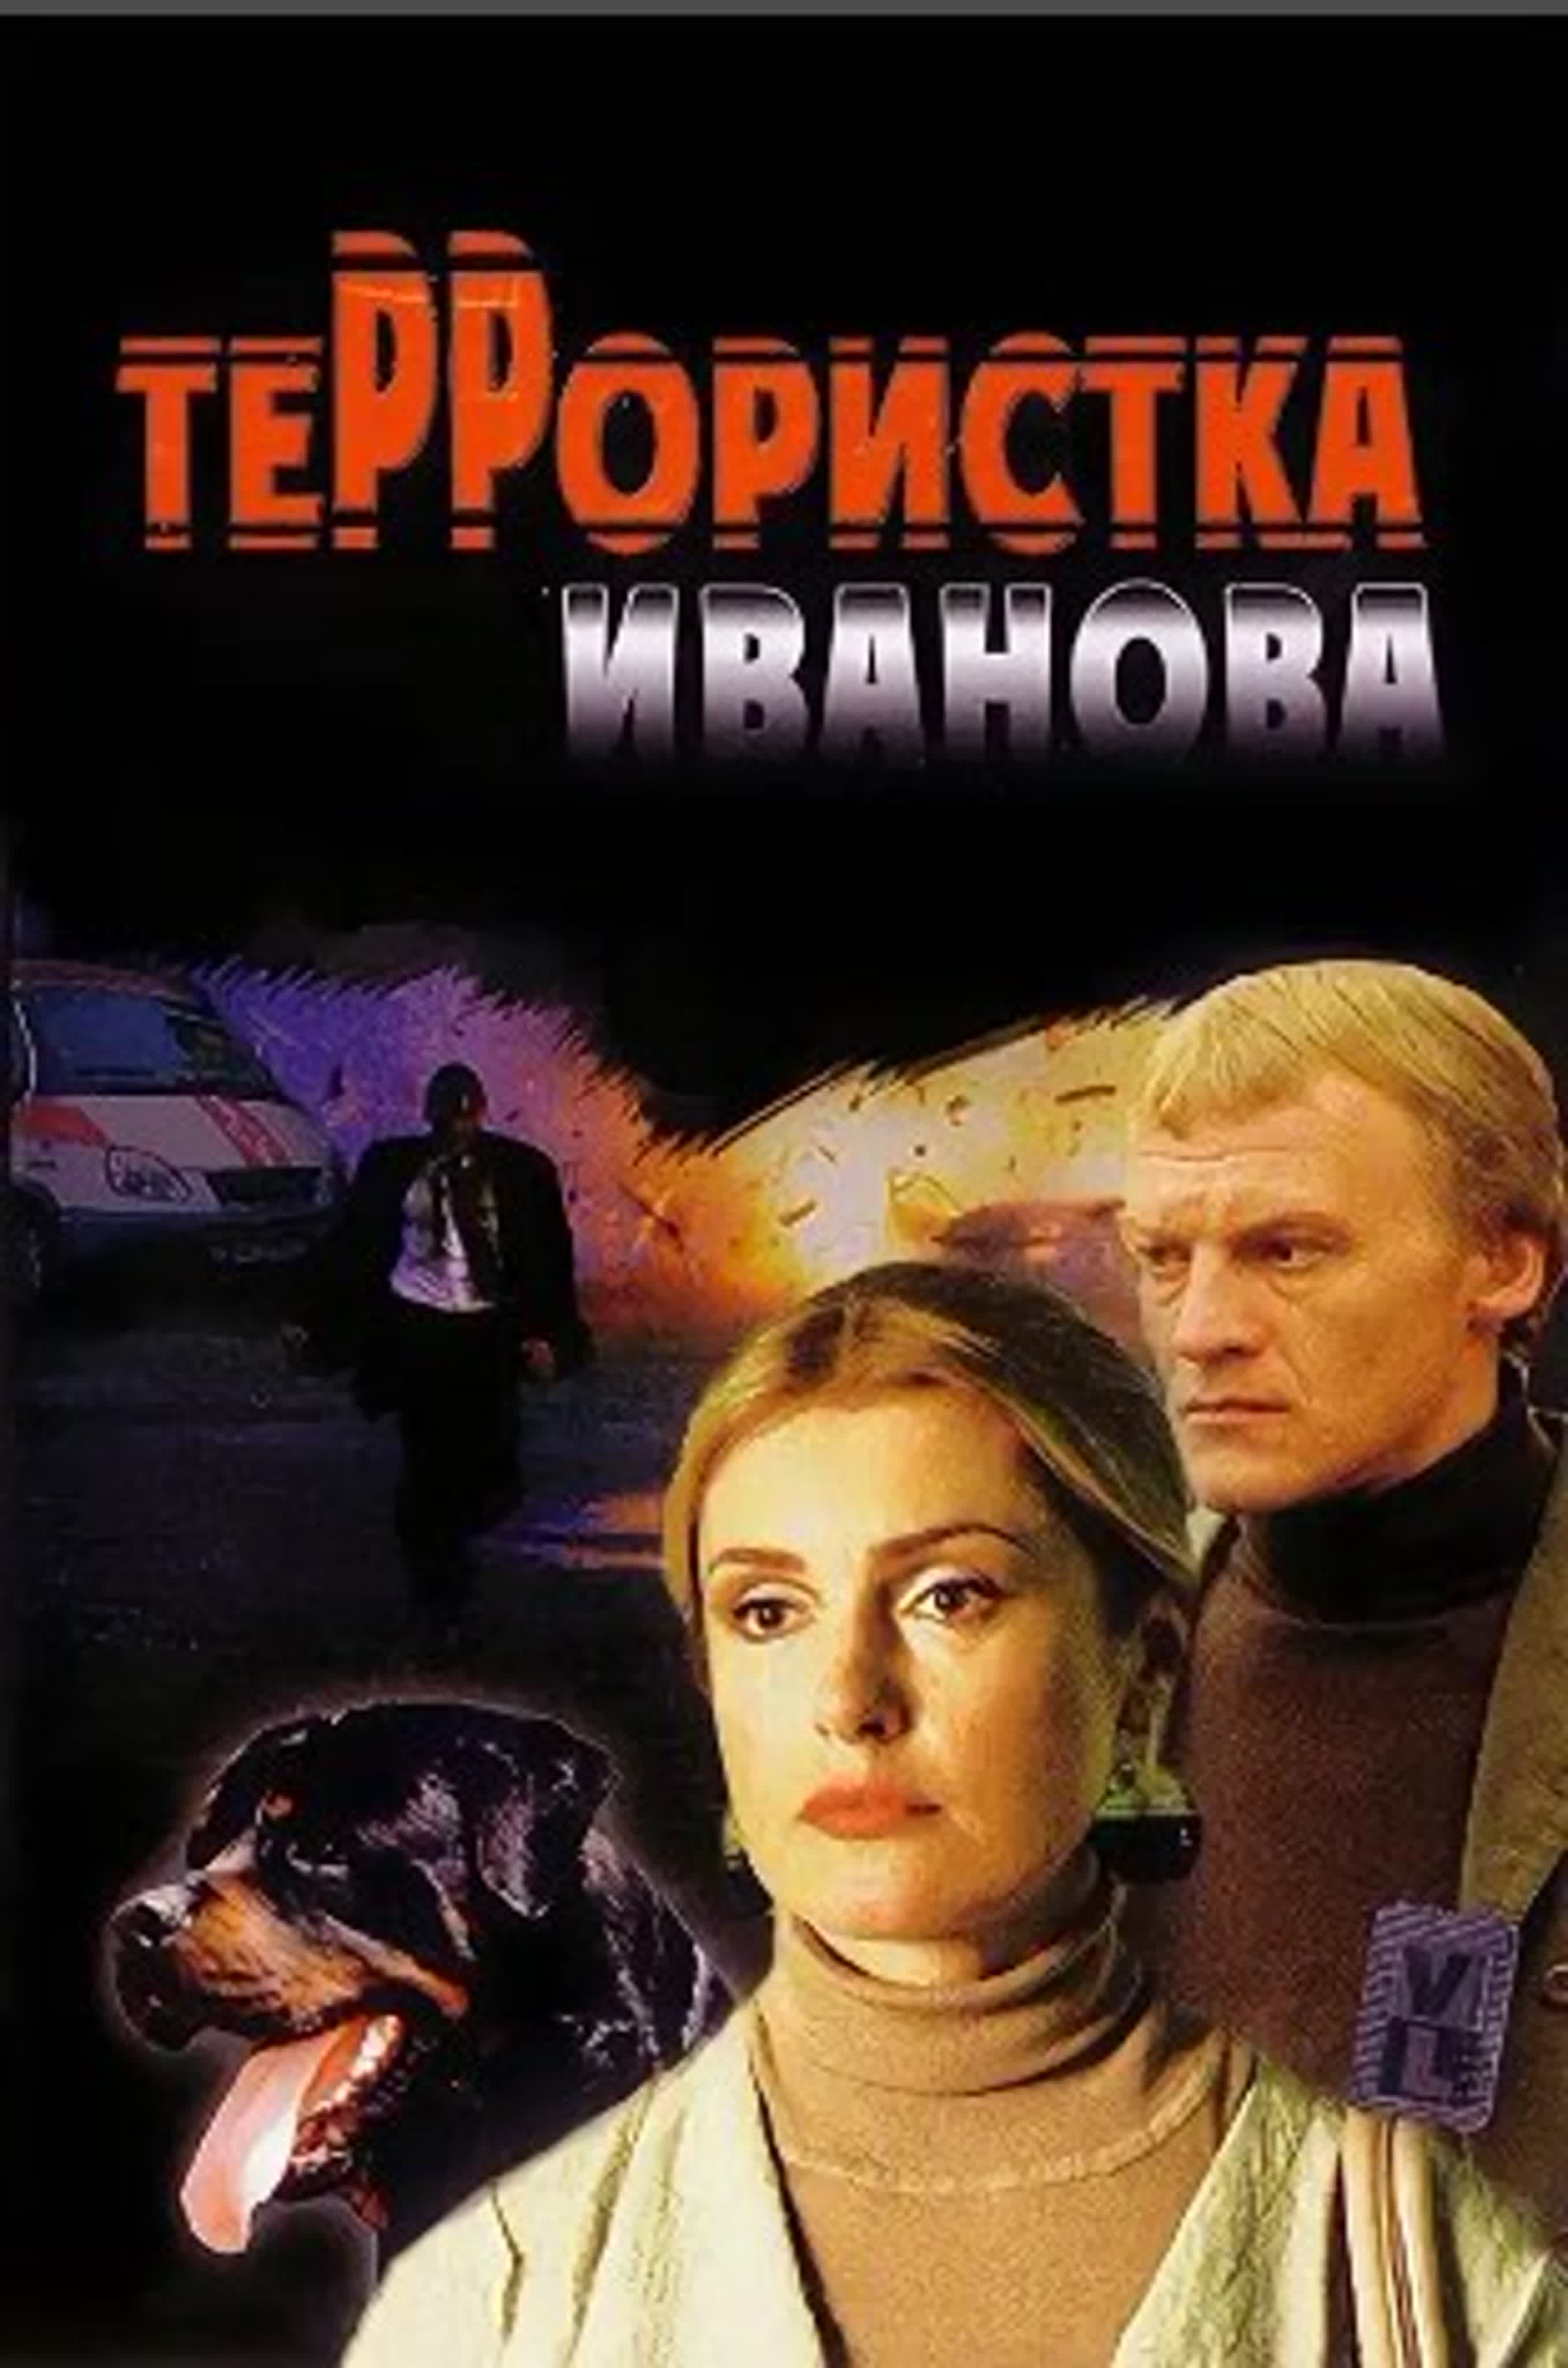 Террористка Иванова/2009/Россия/мелодрама